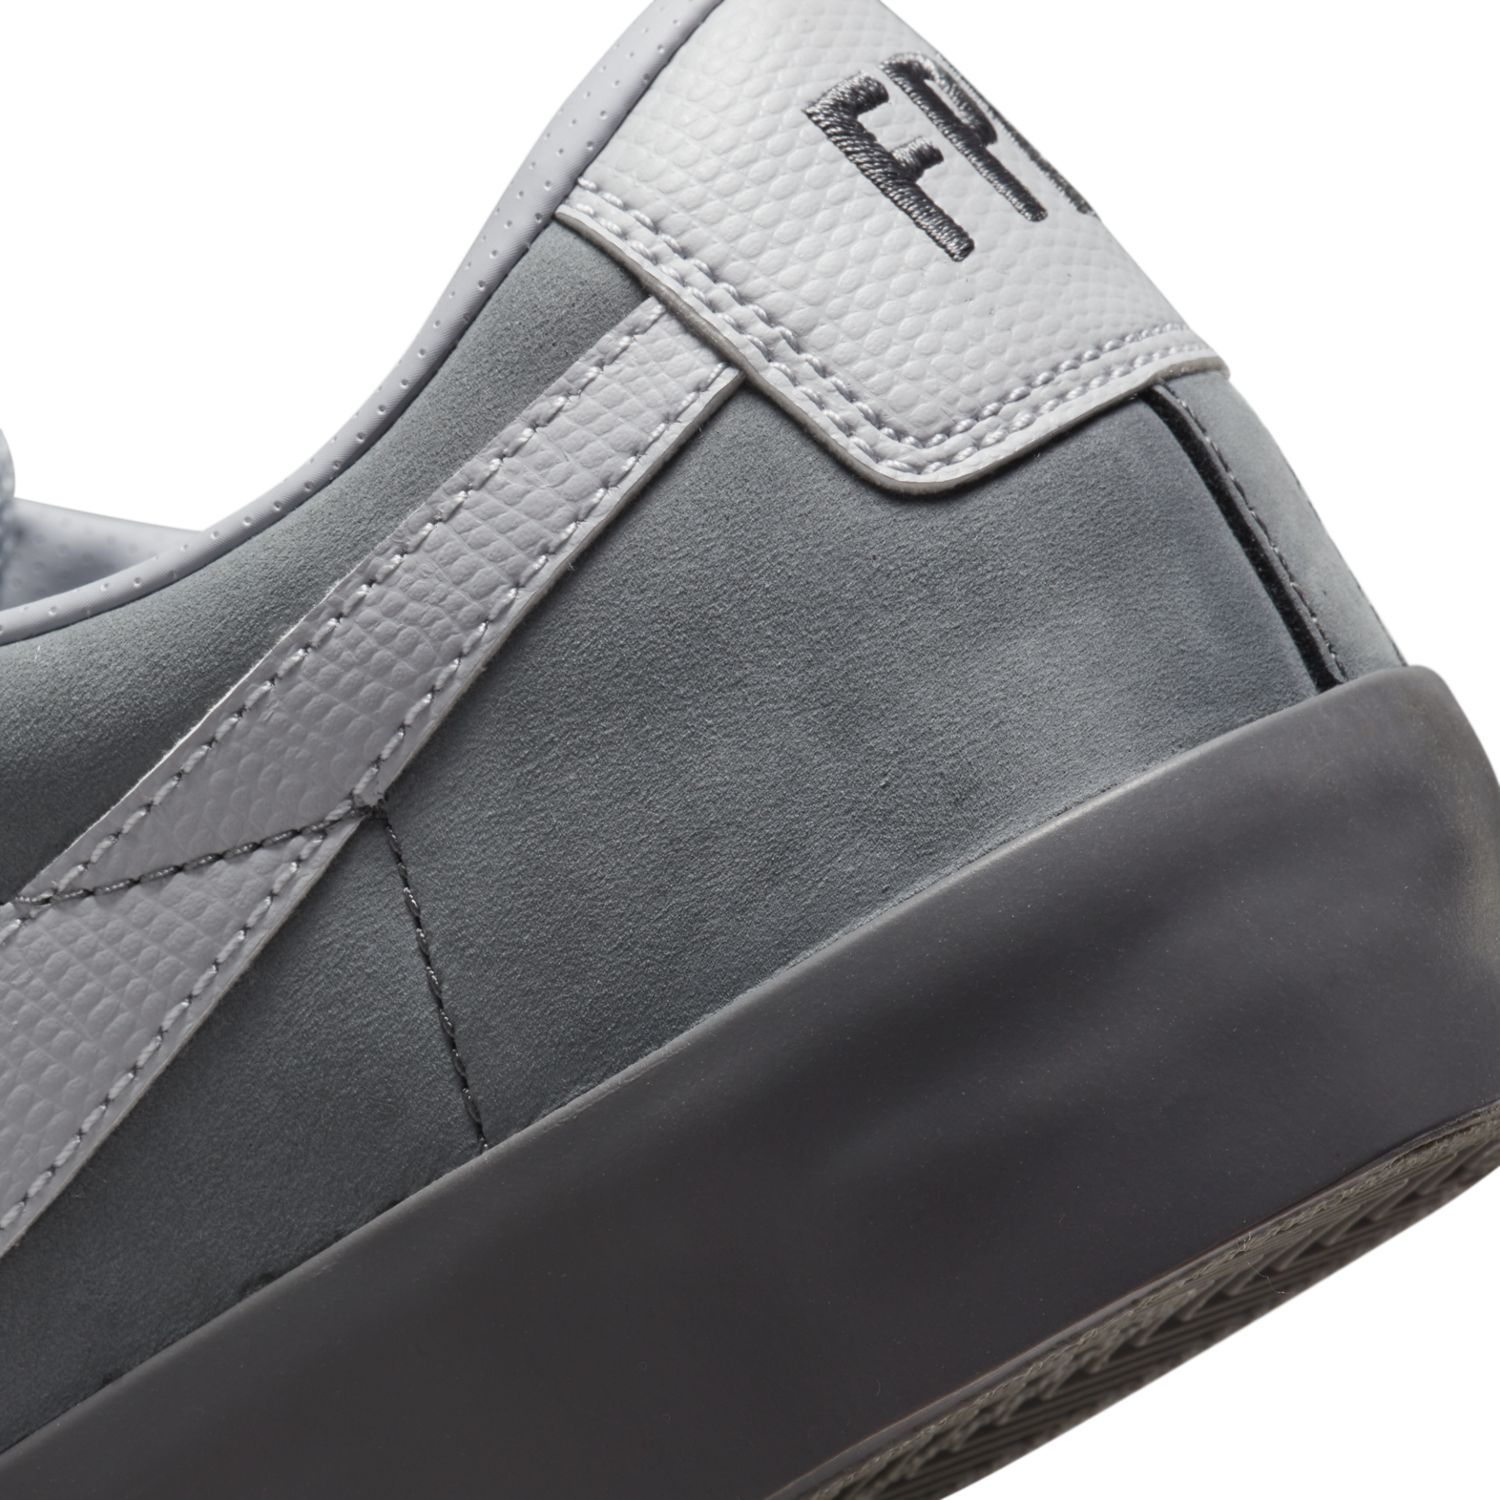 Nike SB x FPAR Blazer Low QS cool grey